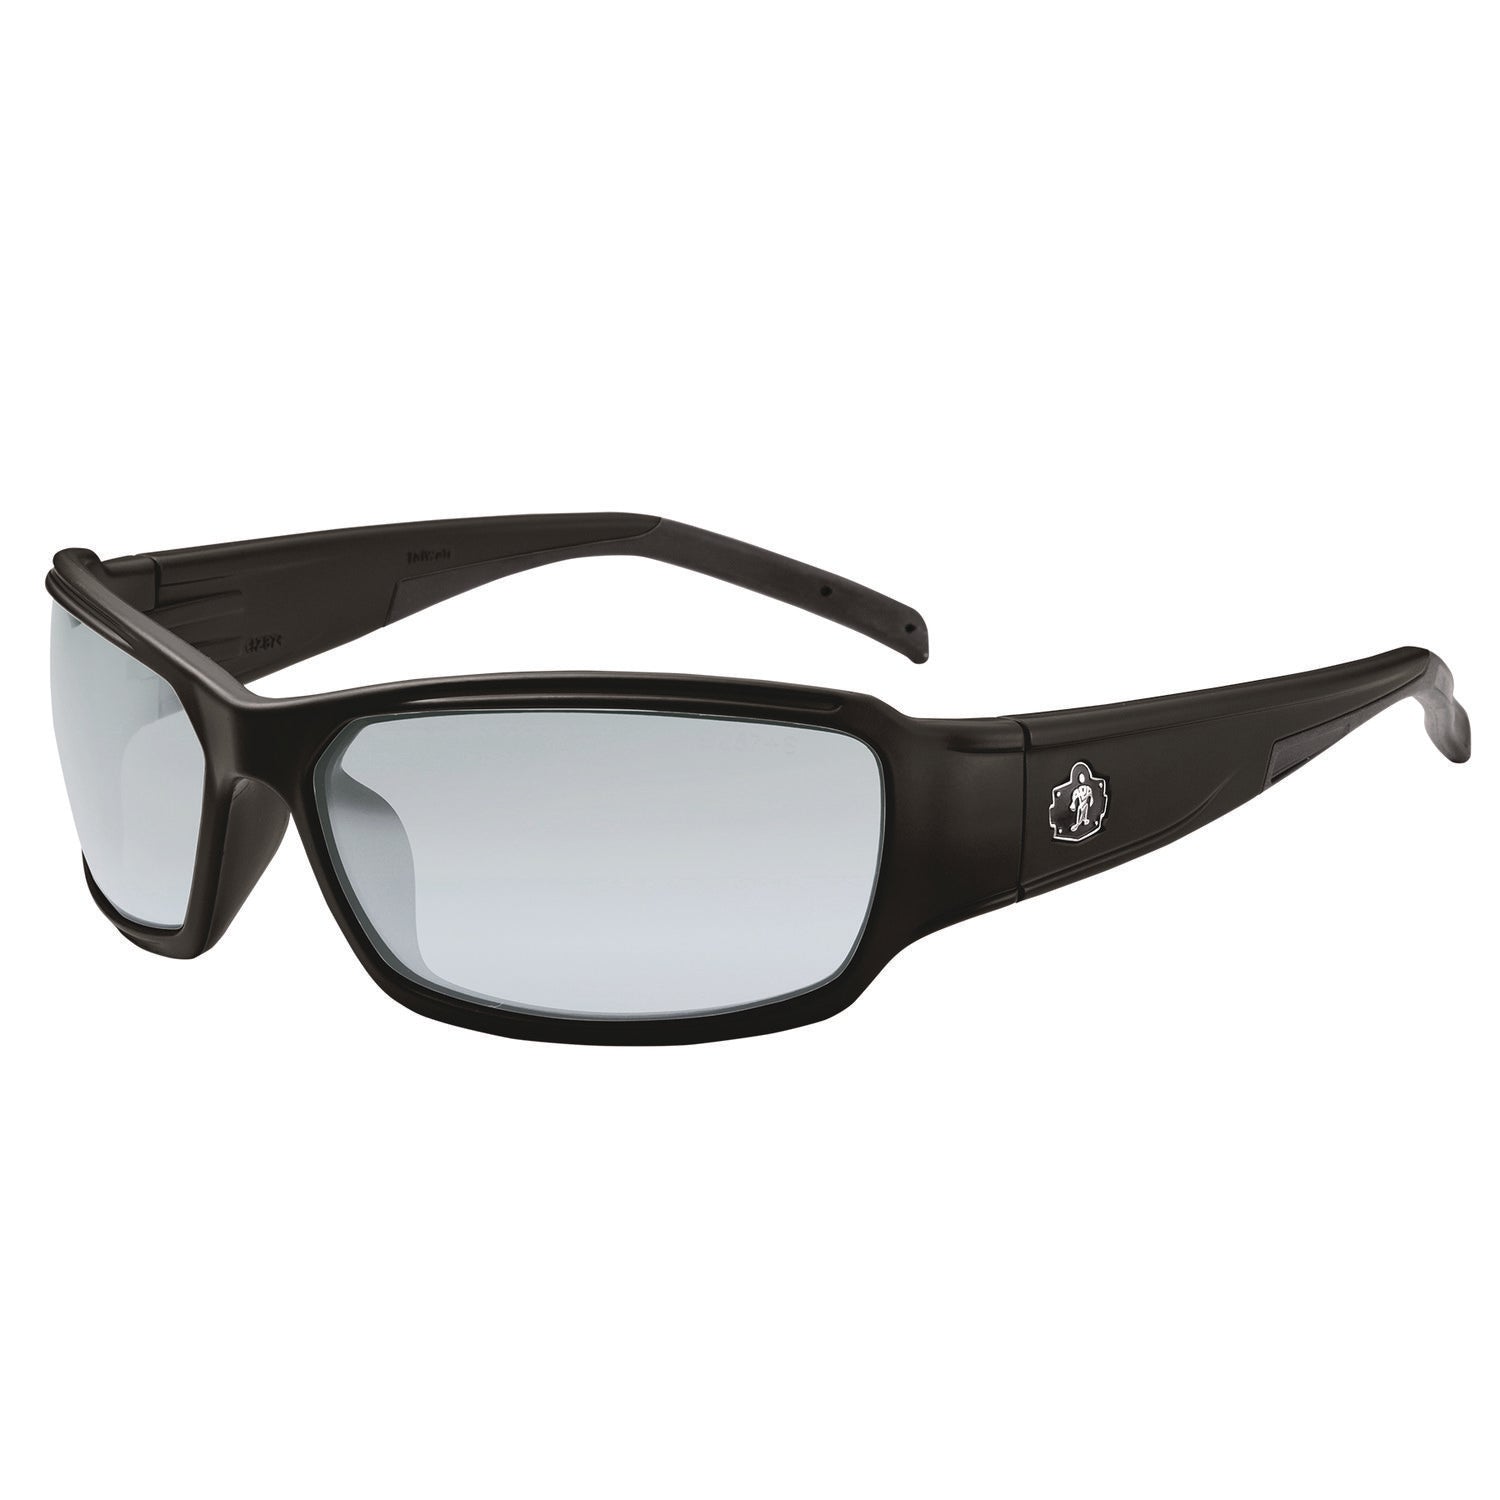 skullerz-thor-anti-scratch-enhanced-anti-fog-safety-glasses-black-frame-in-outdoor-polycarbonate-lensships-in-1-3-bus-days_ego51085 - 1